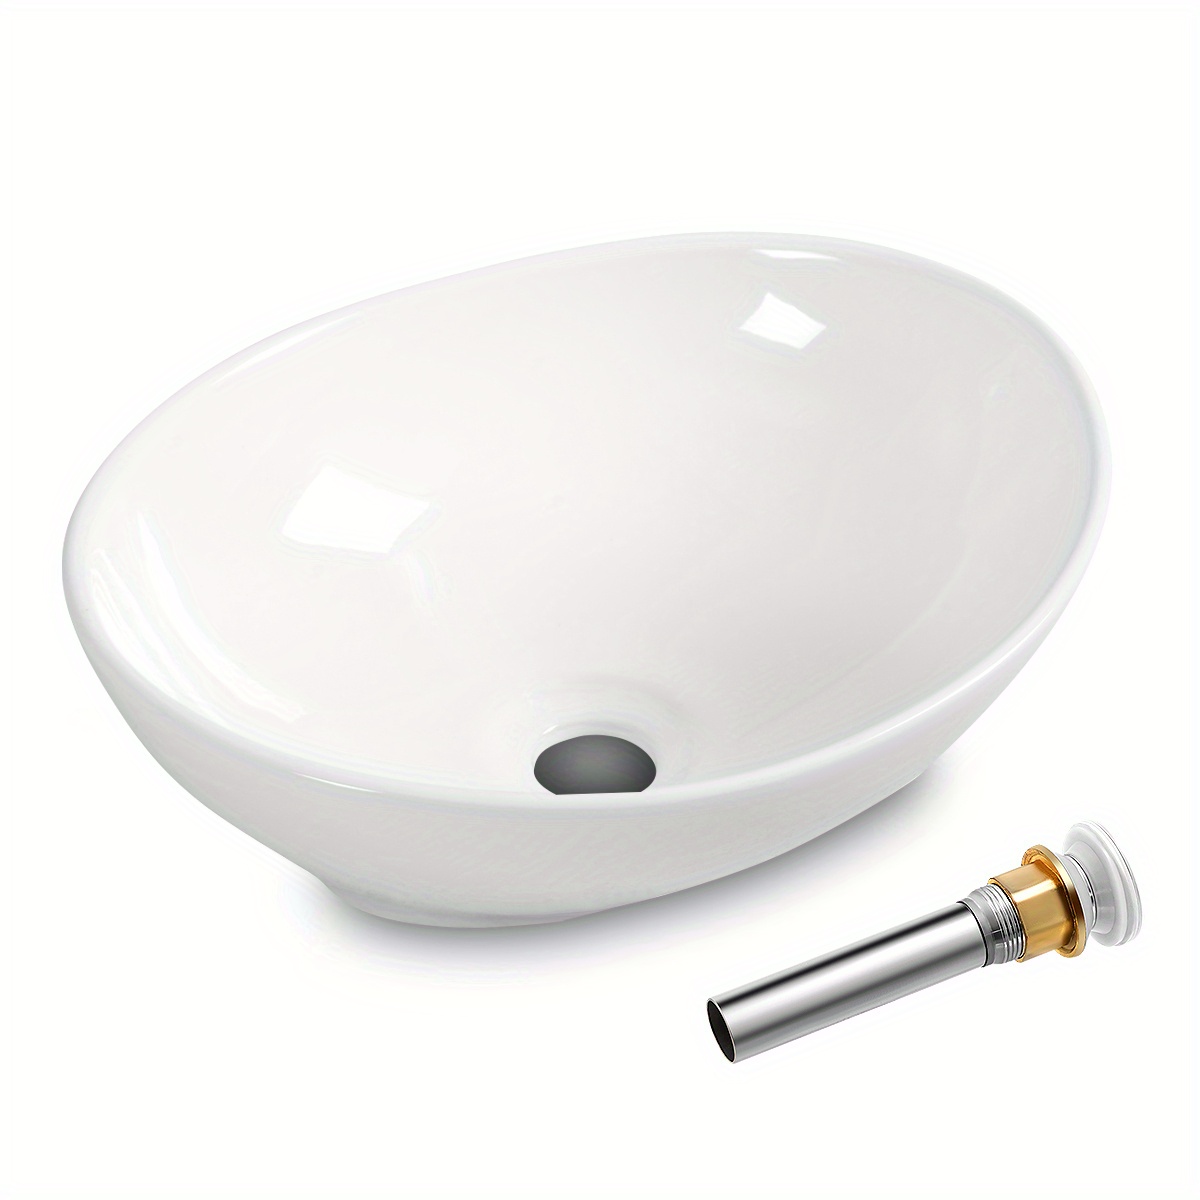 

Lifezeal Goplus Oval Bathroom Basin Ceramic Vessel Sink Bowl Porcelain W/ Pop Up Drain